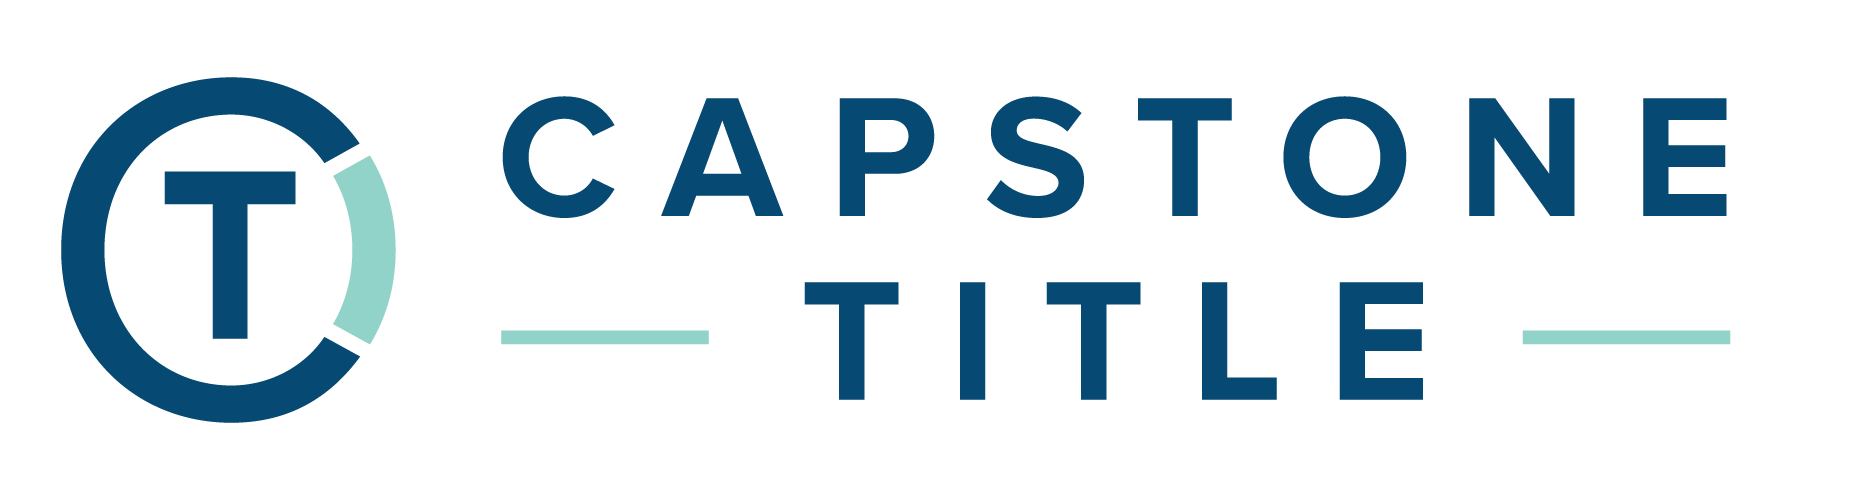 Capstone Title, LLC | Real Estate Title Insurance